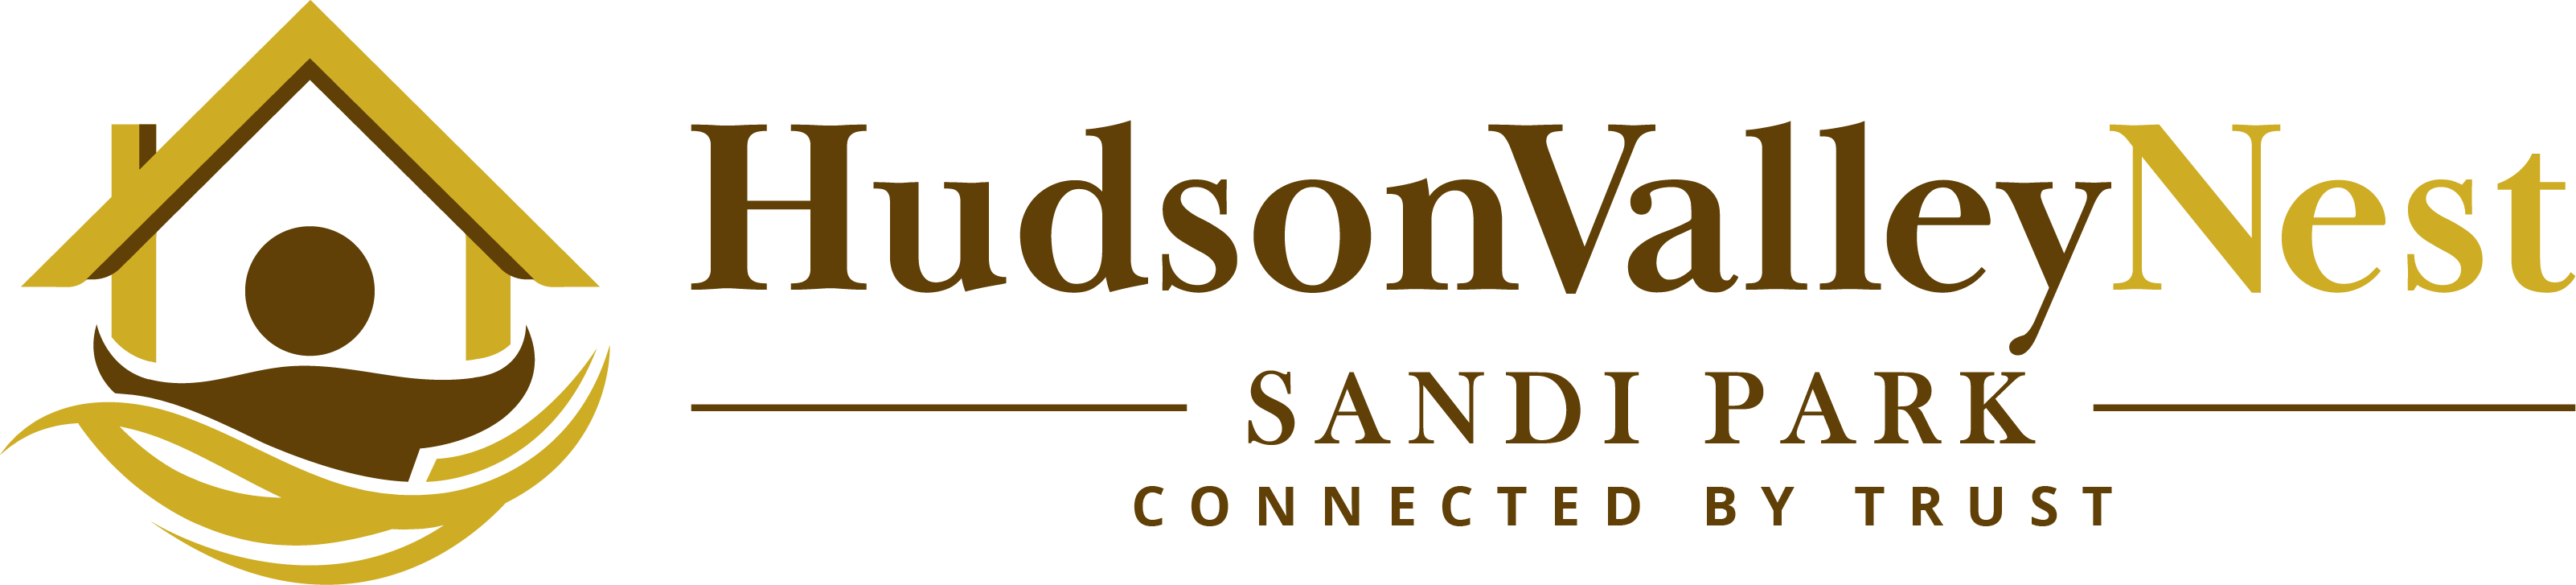 Sandi Park – HudsonValleyNest.com